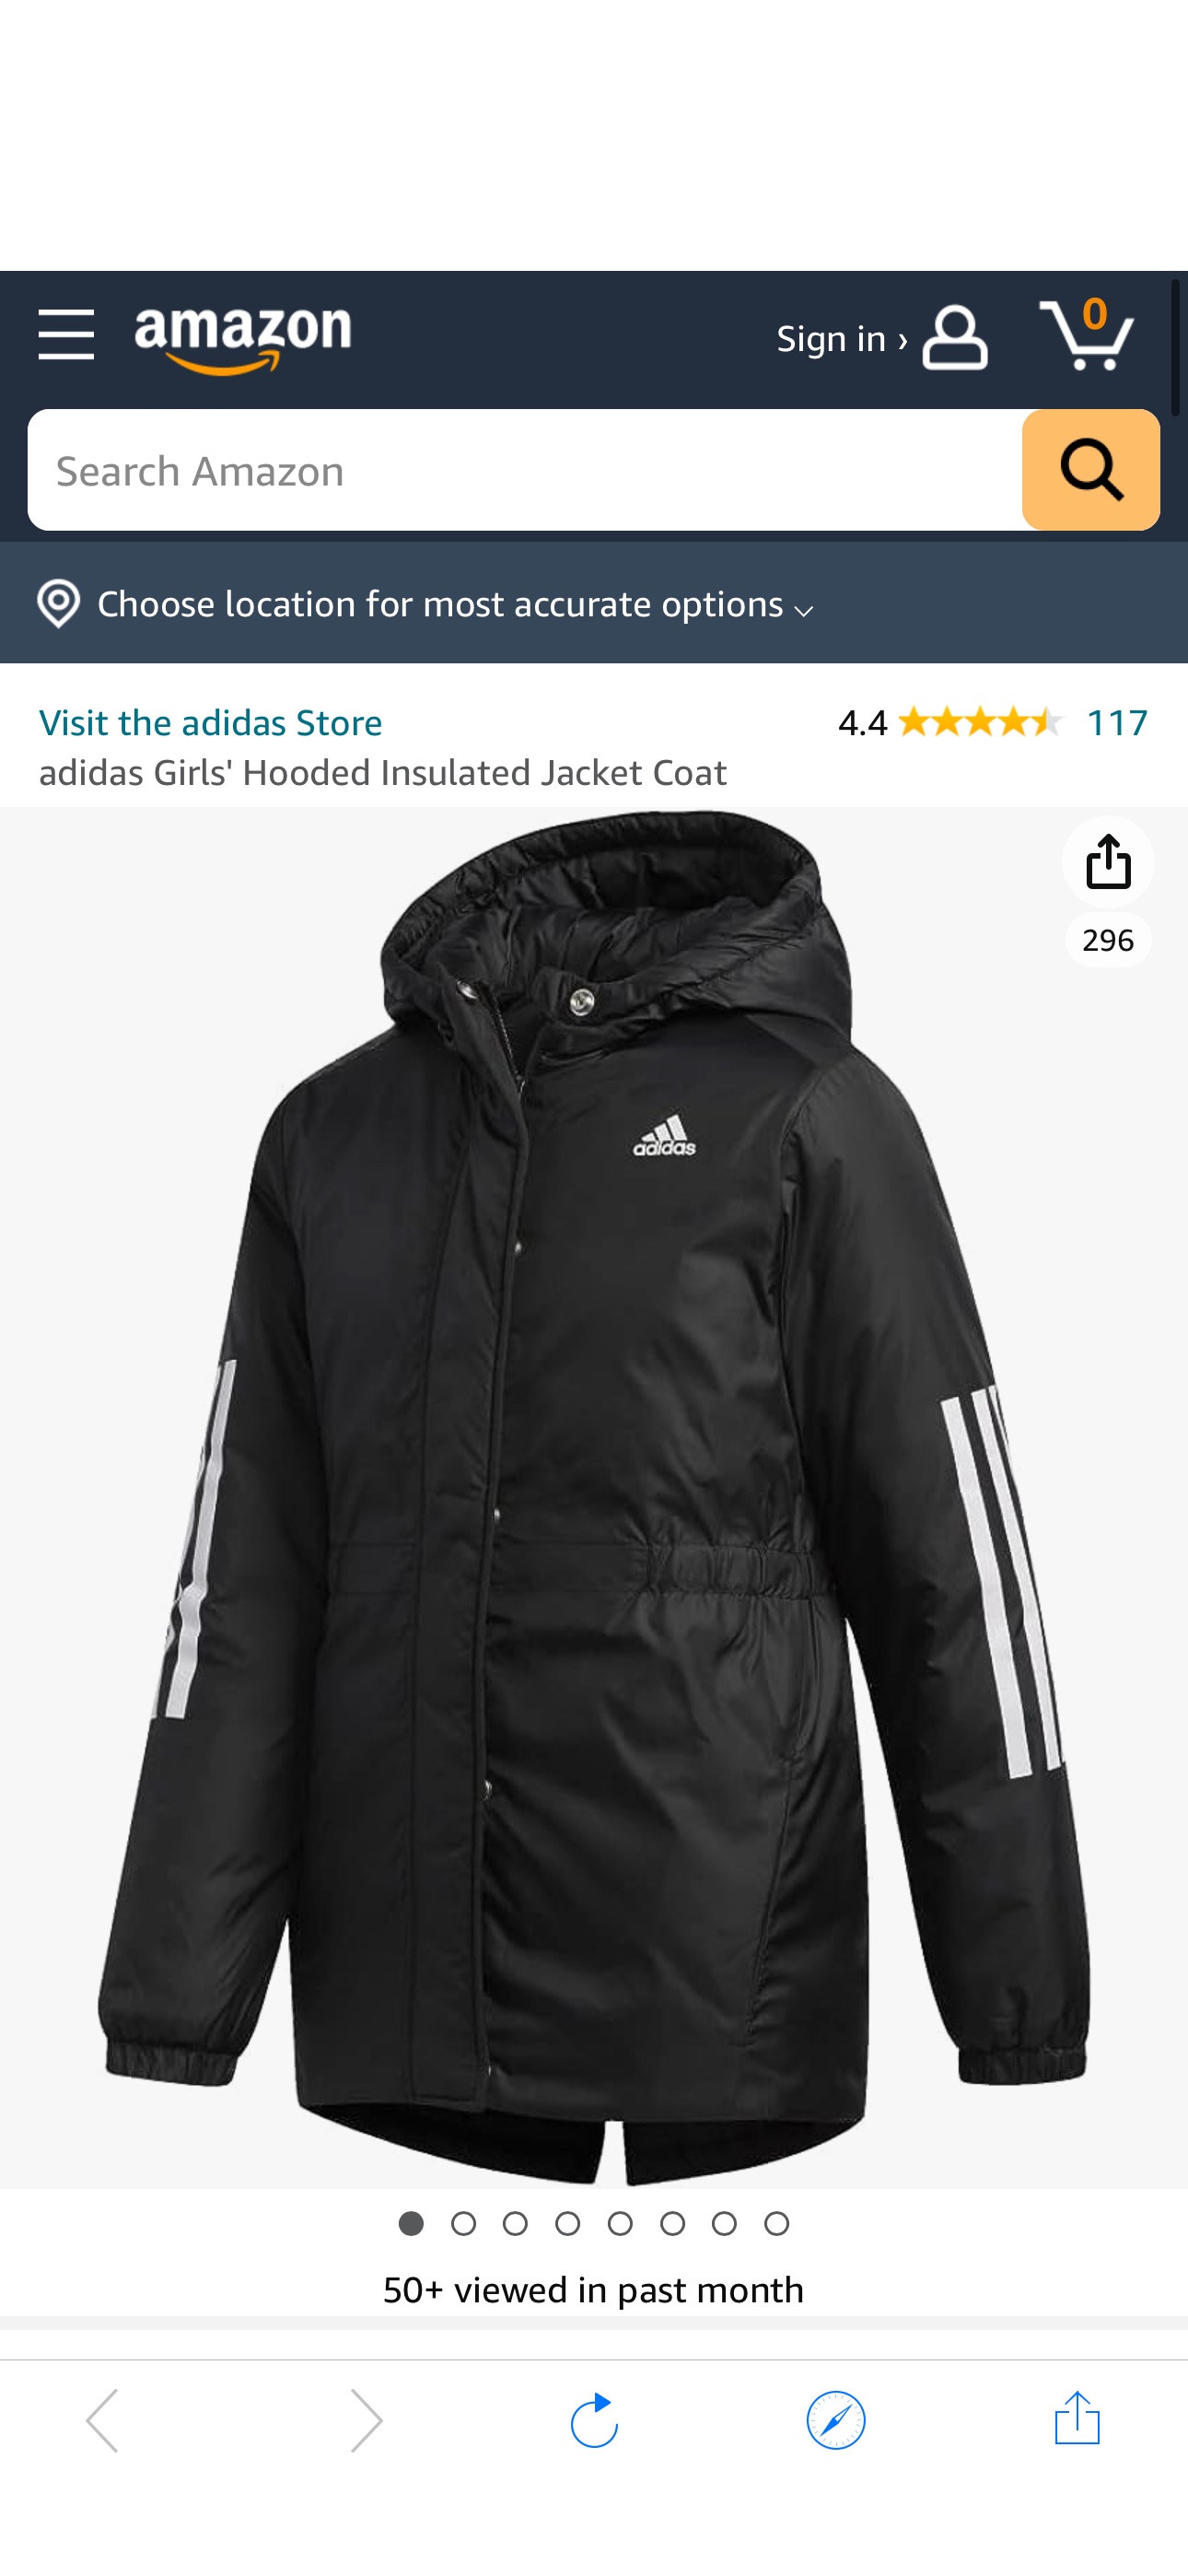 Amazon.com: adidas Girls' Hooded Insulated Jacket Coat, Black, XX-Small: Clothing, Shoes & Jewelry